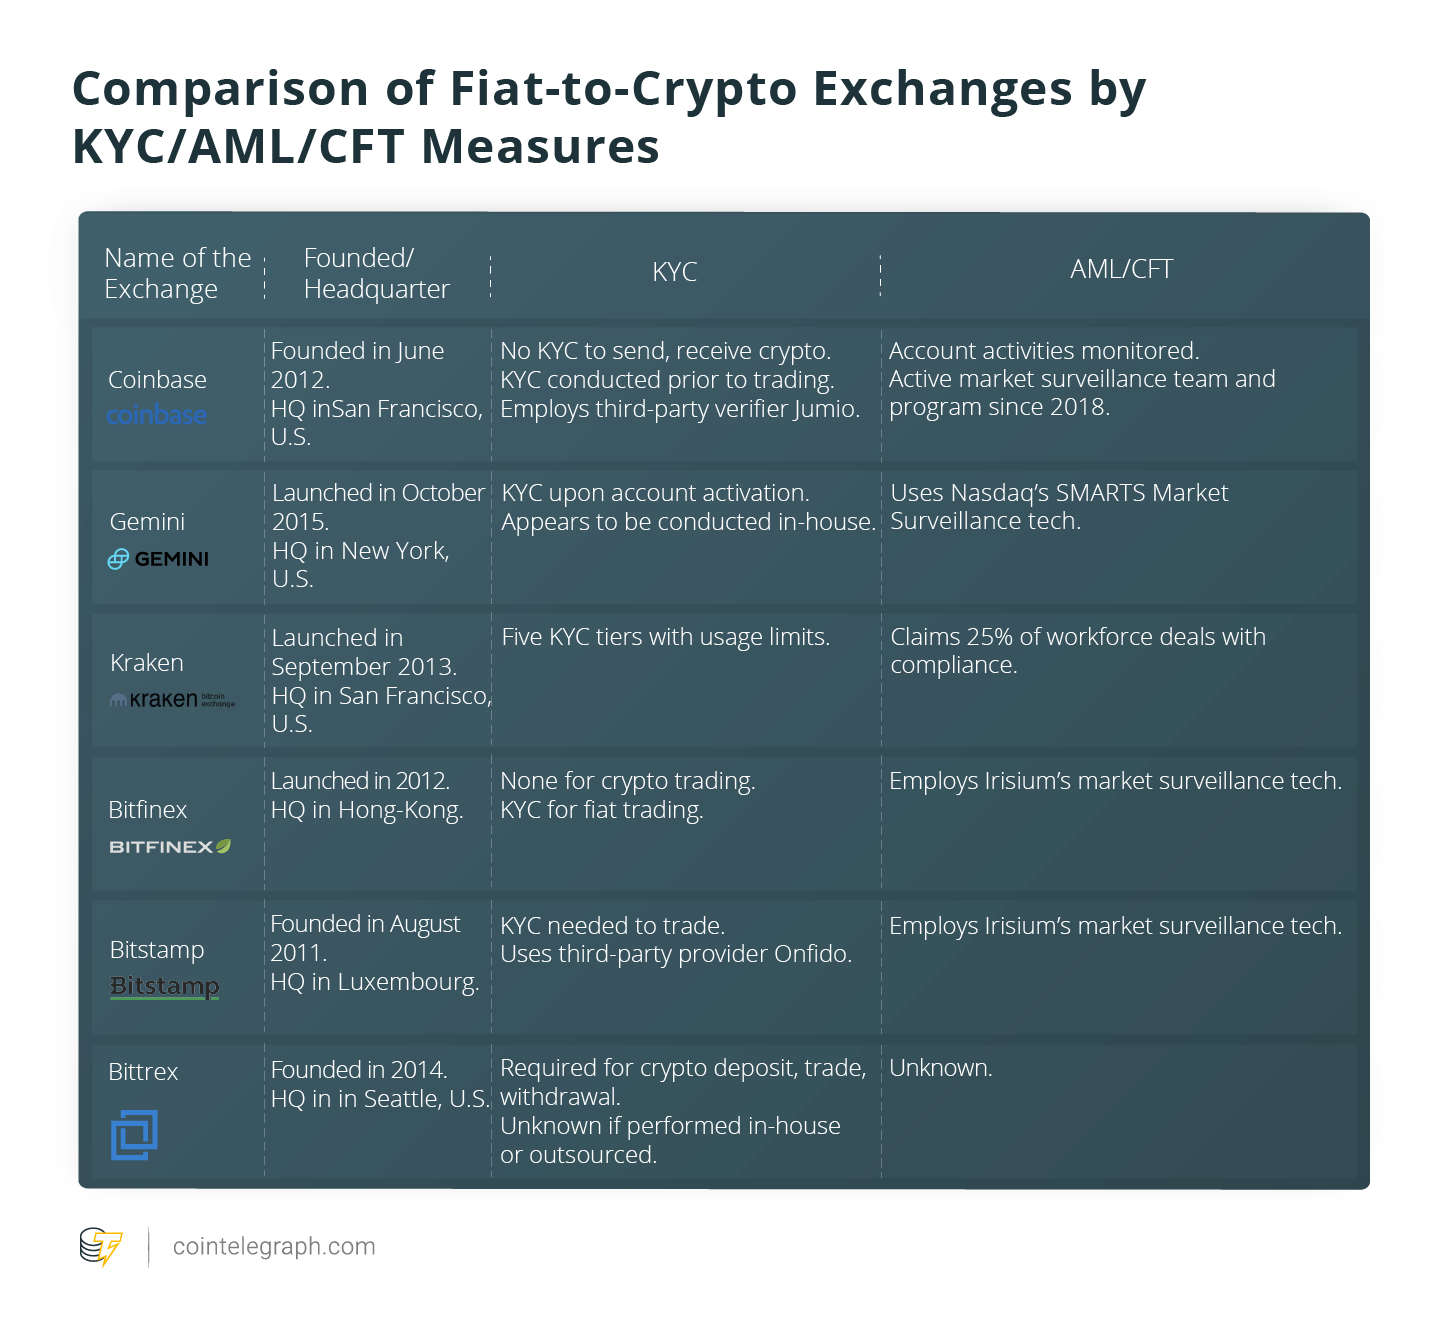 Fiat-to-crypto exchanges